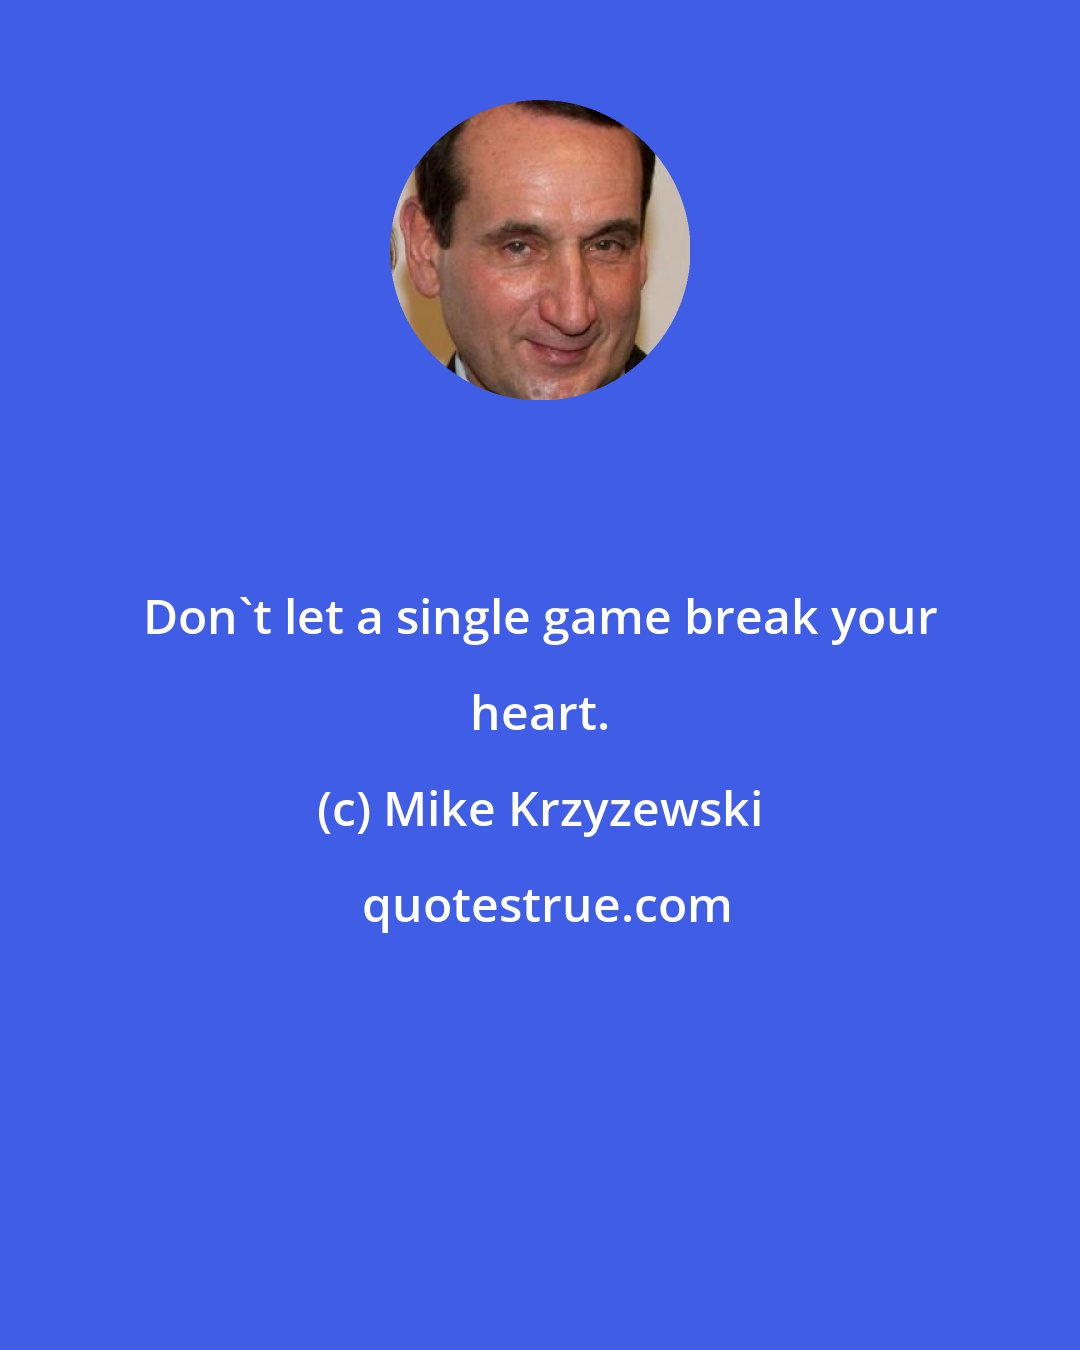 Mike Krzyzewski: Don't let a single game break your heart.